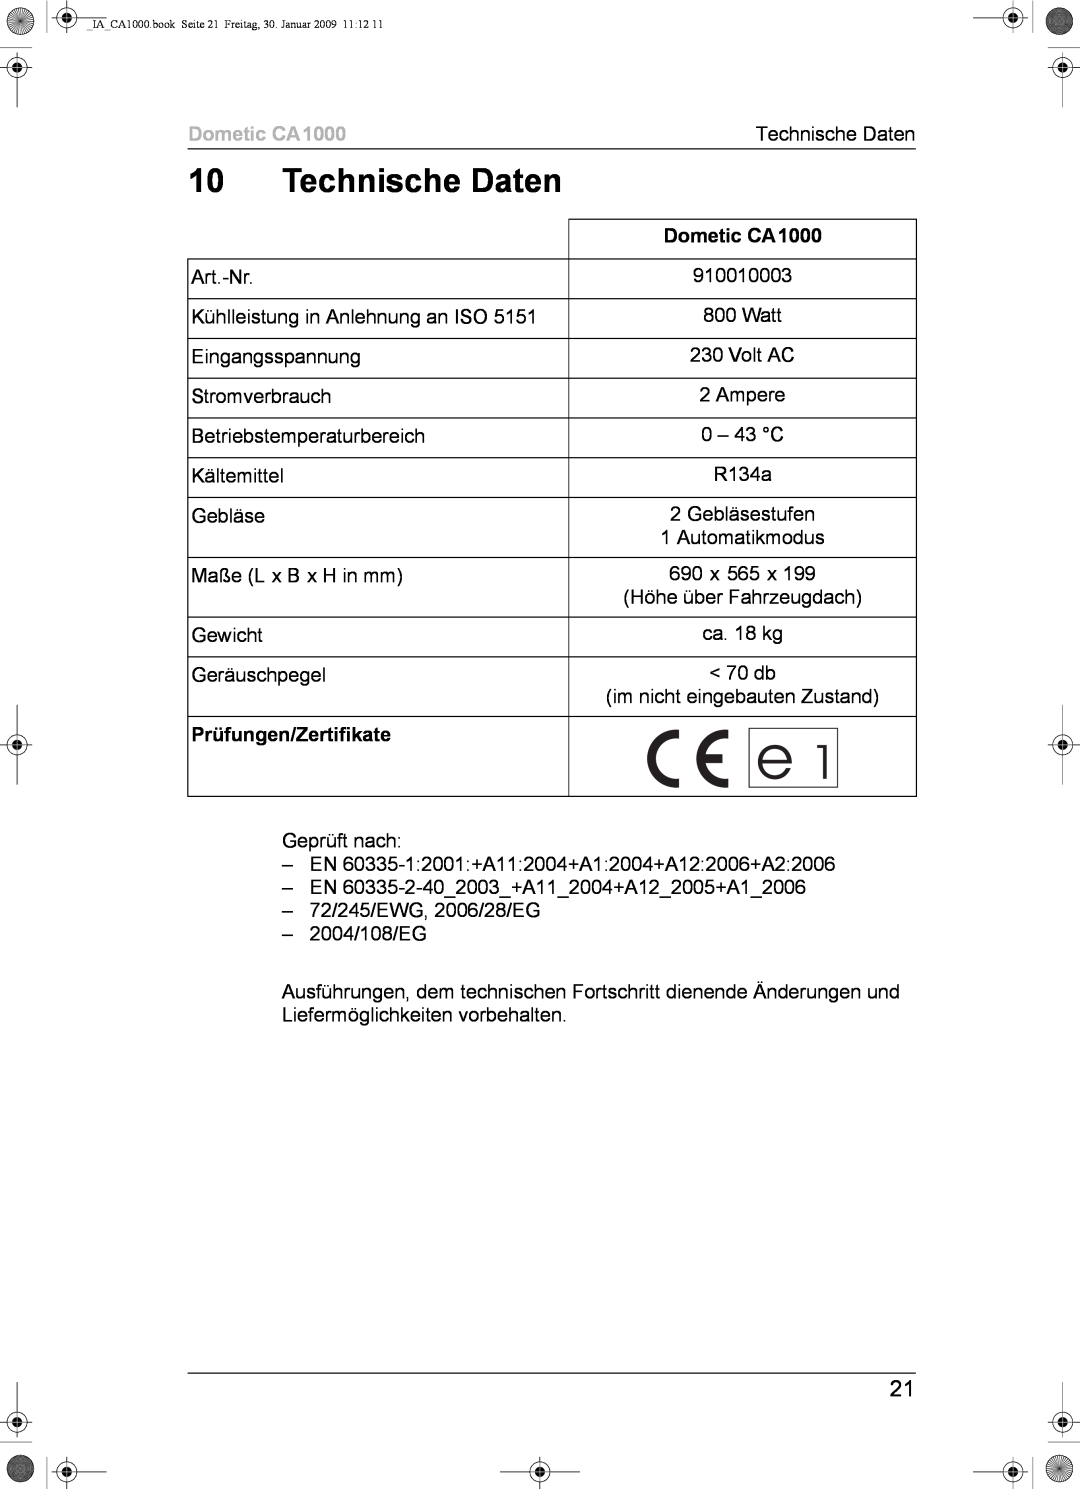 Dometic installation manual Technische Daten, Dometic CA1000, Prüfungen/Zertifikate 